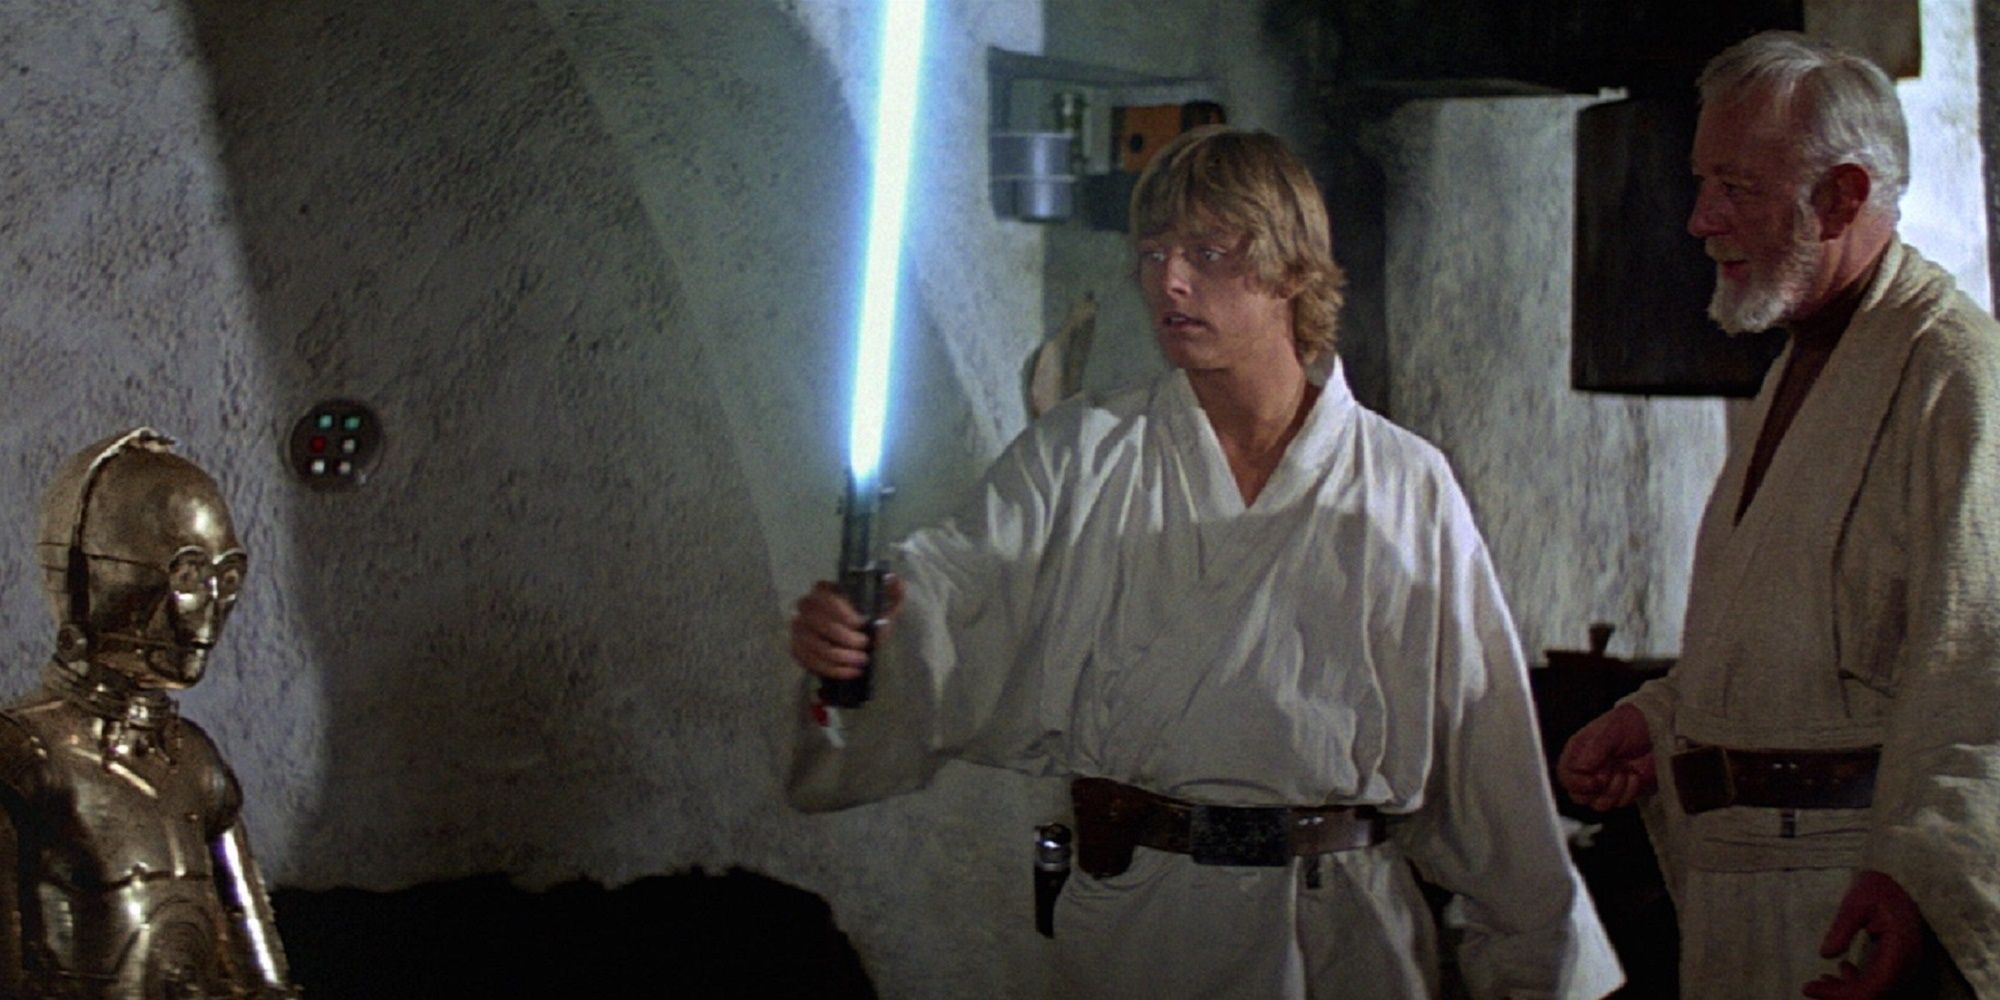 Luke Skywalker with his blue lightsaber and Obi Wan Kenobi and C-3PO in Star Wars.